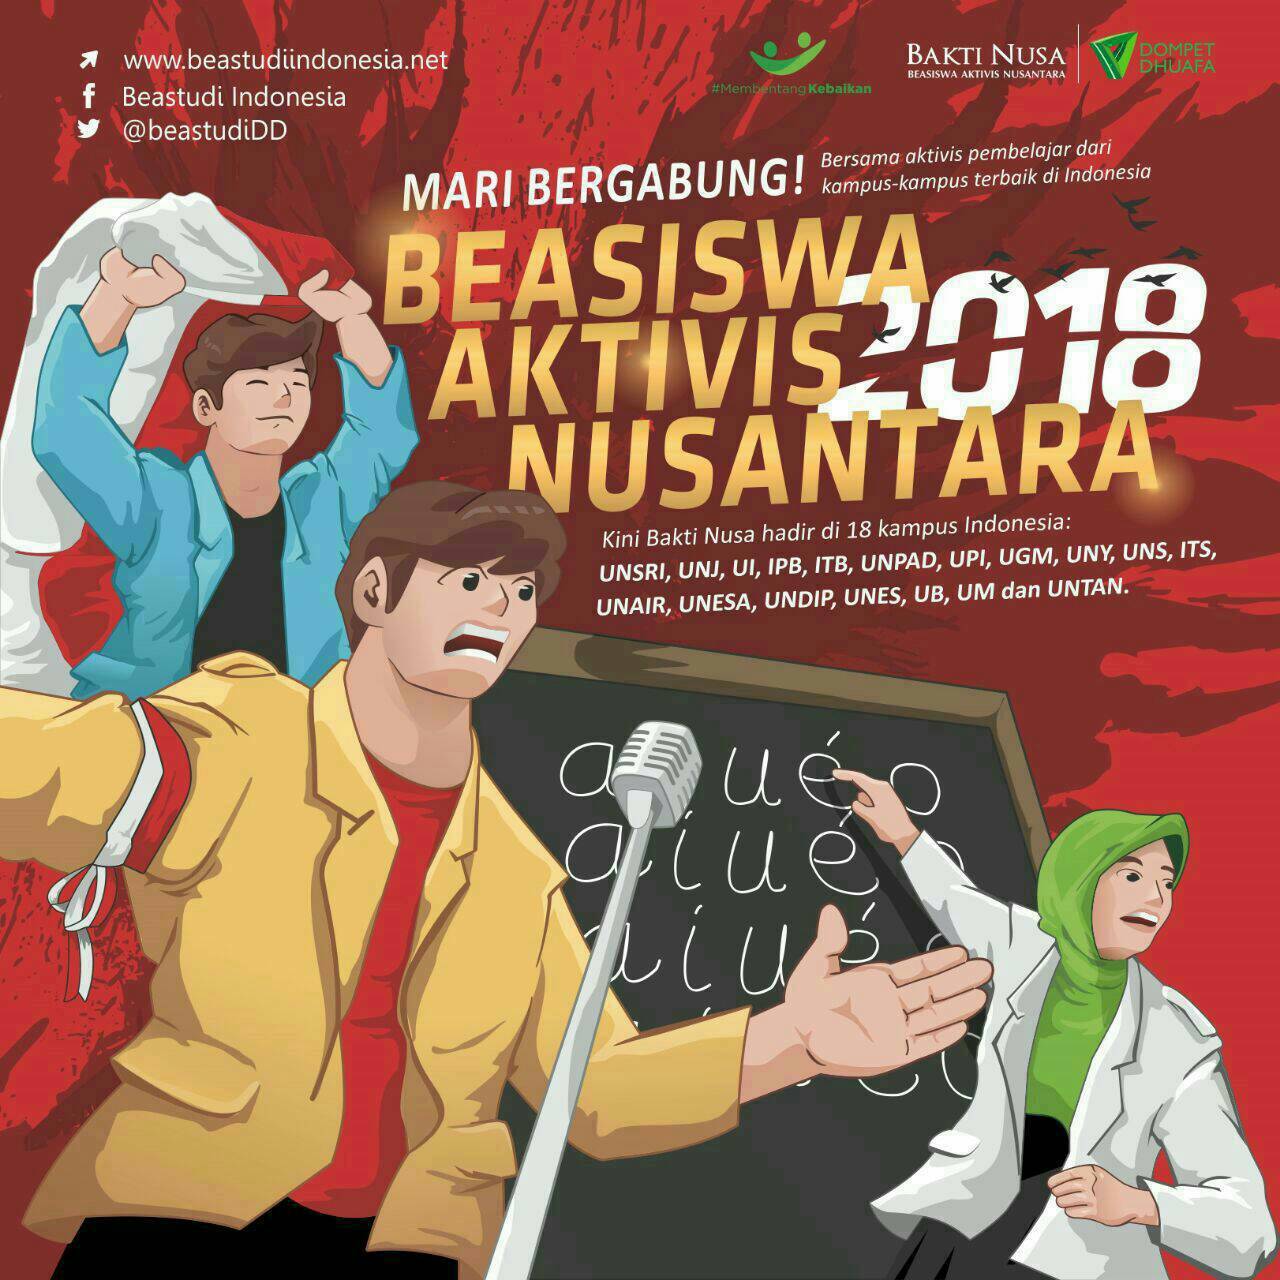 Beasiswa Aktivis Nusantara